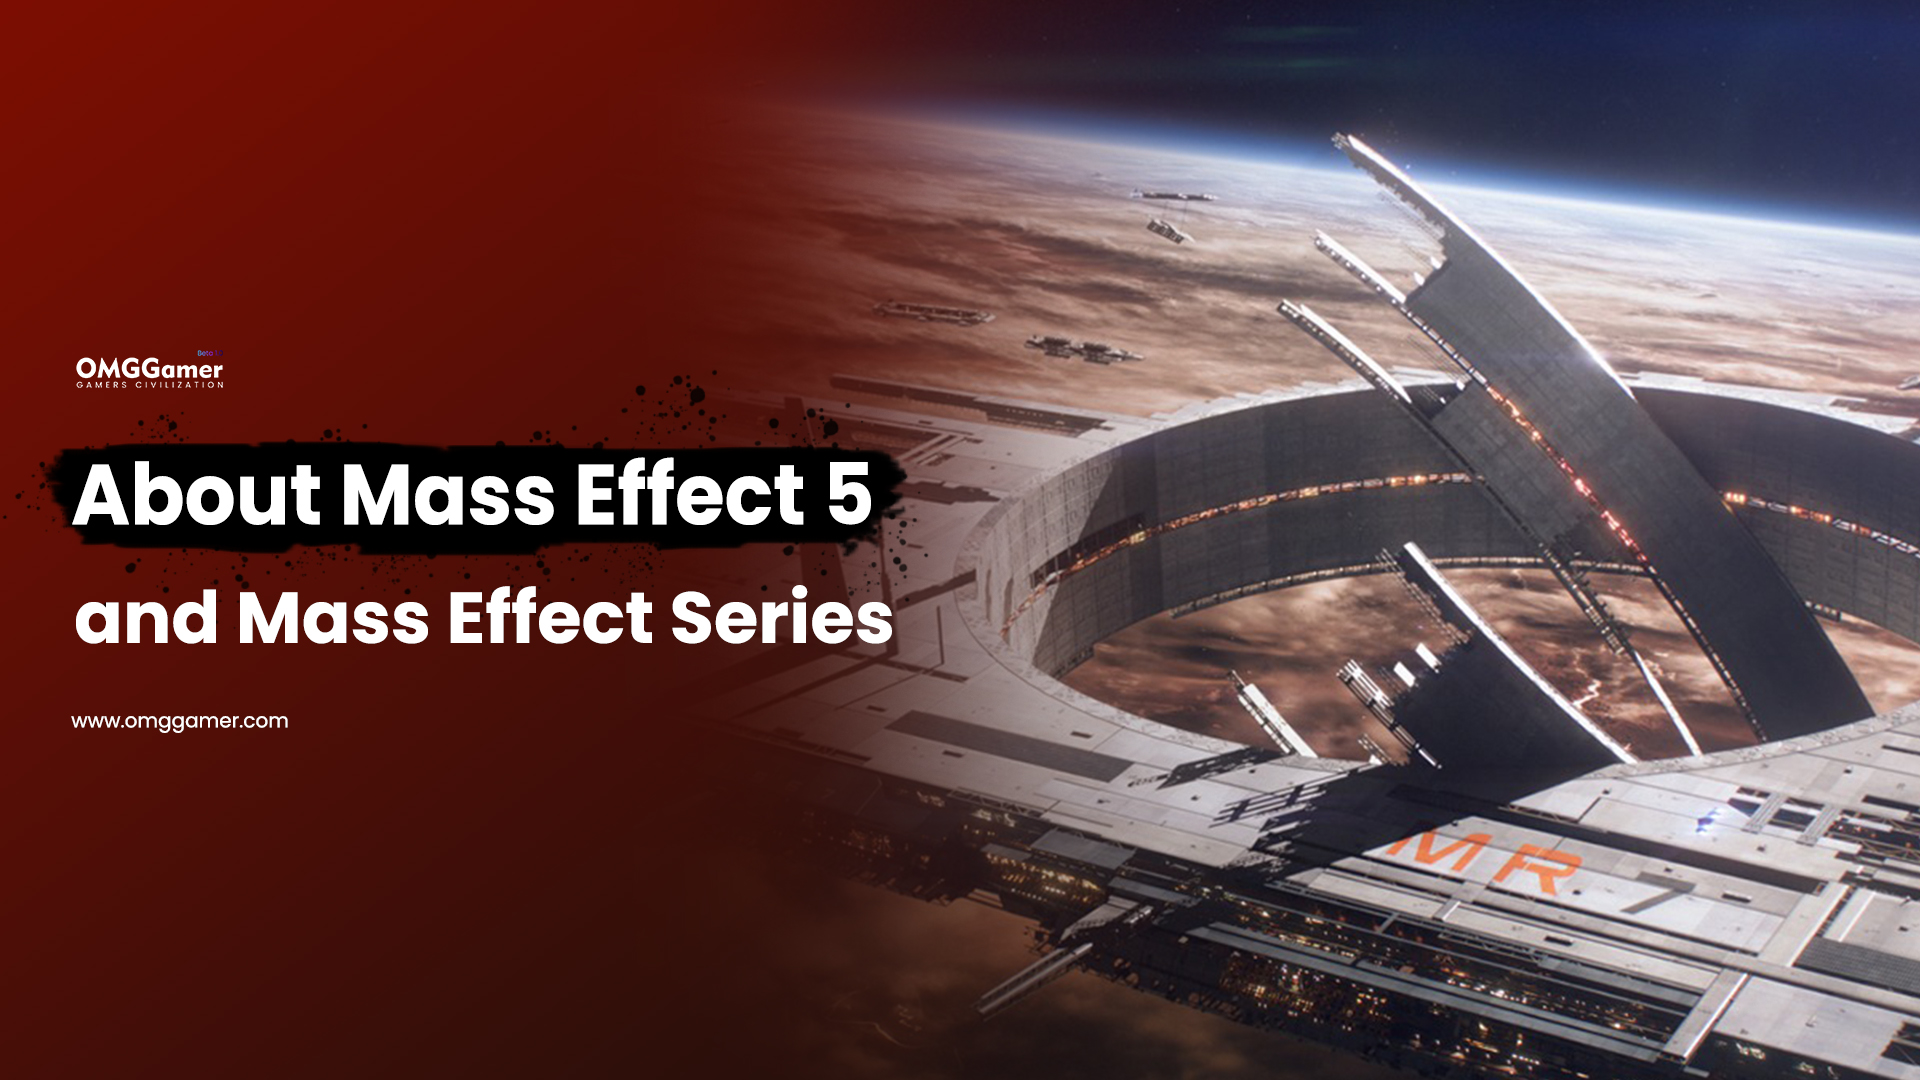 About Mass Effect 5 and Mass Effect Series